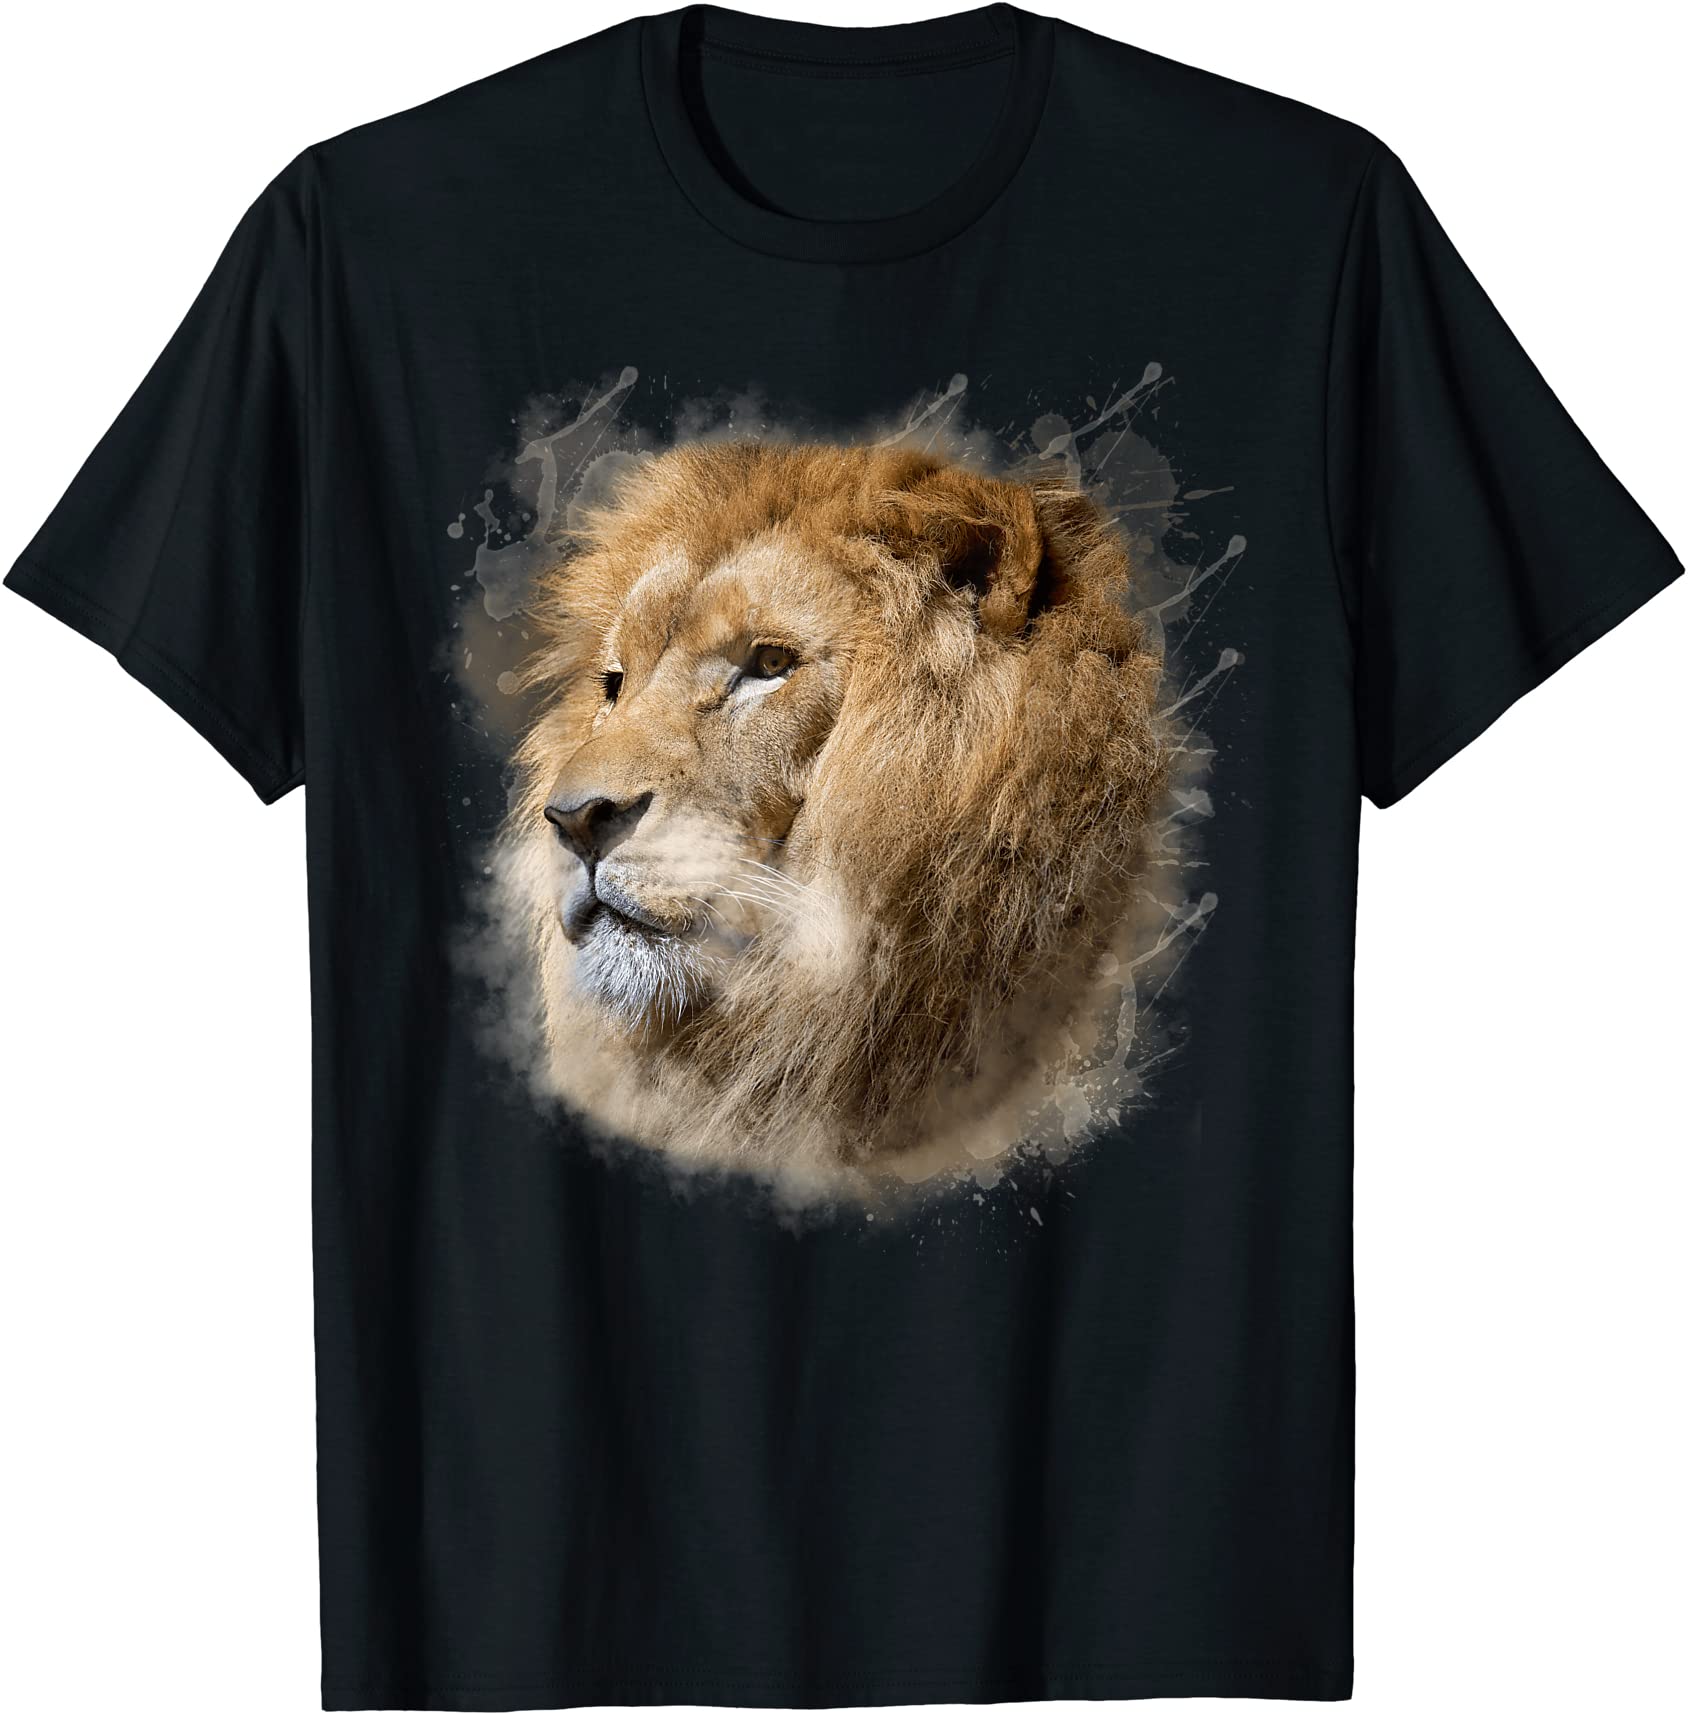 lion illustration t shirt men - Buy t-shirt designs